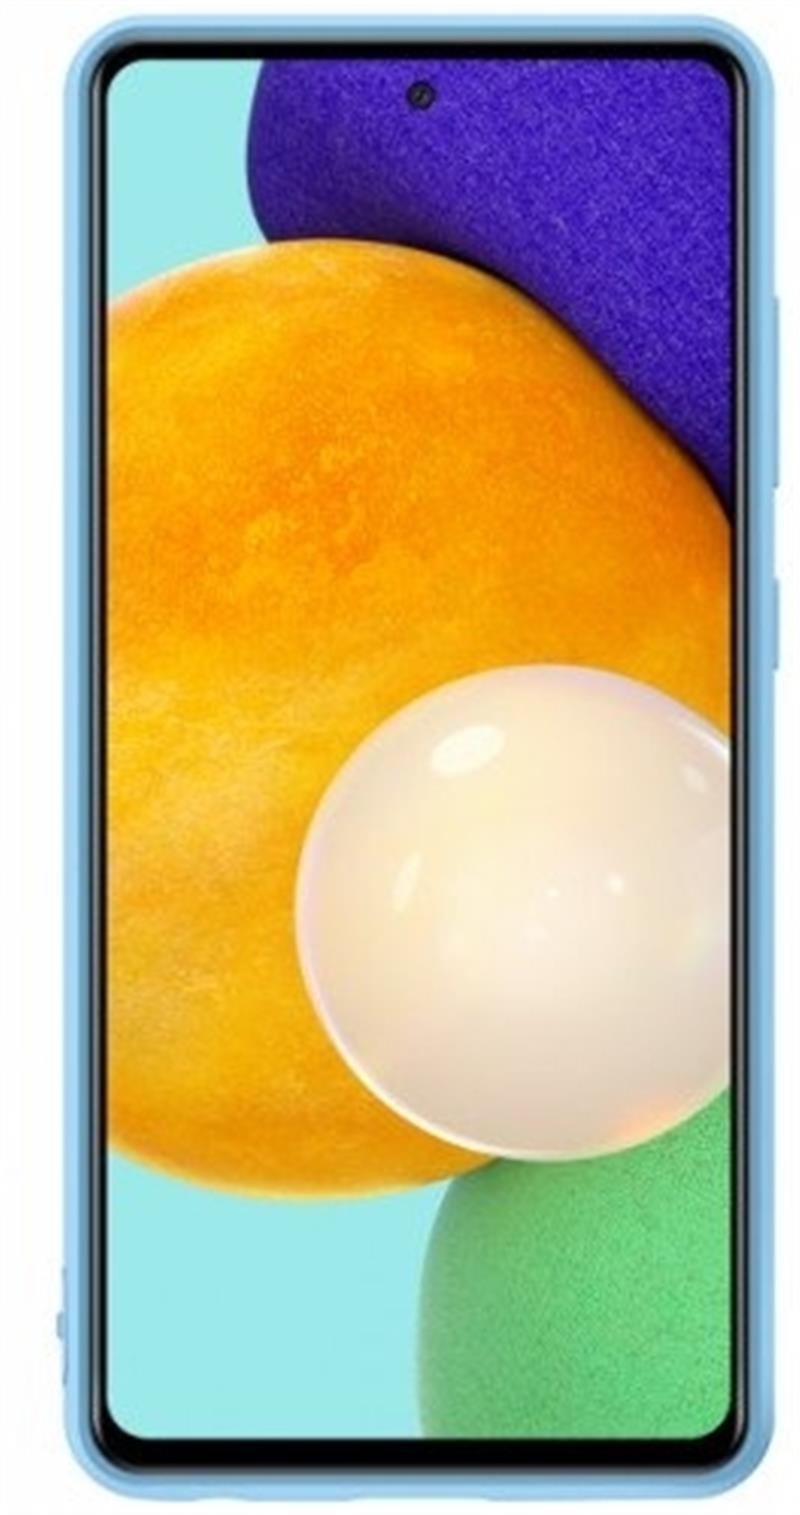 Samsung EF-PA525TLEGWW mobiele telefoon behuizingen 16,5 cm (6.5"") Hoes Blauw